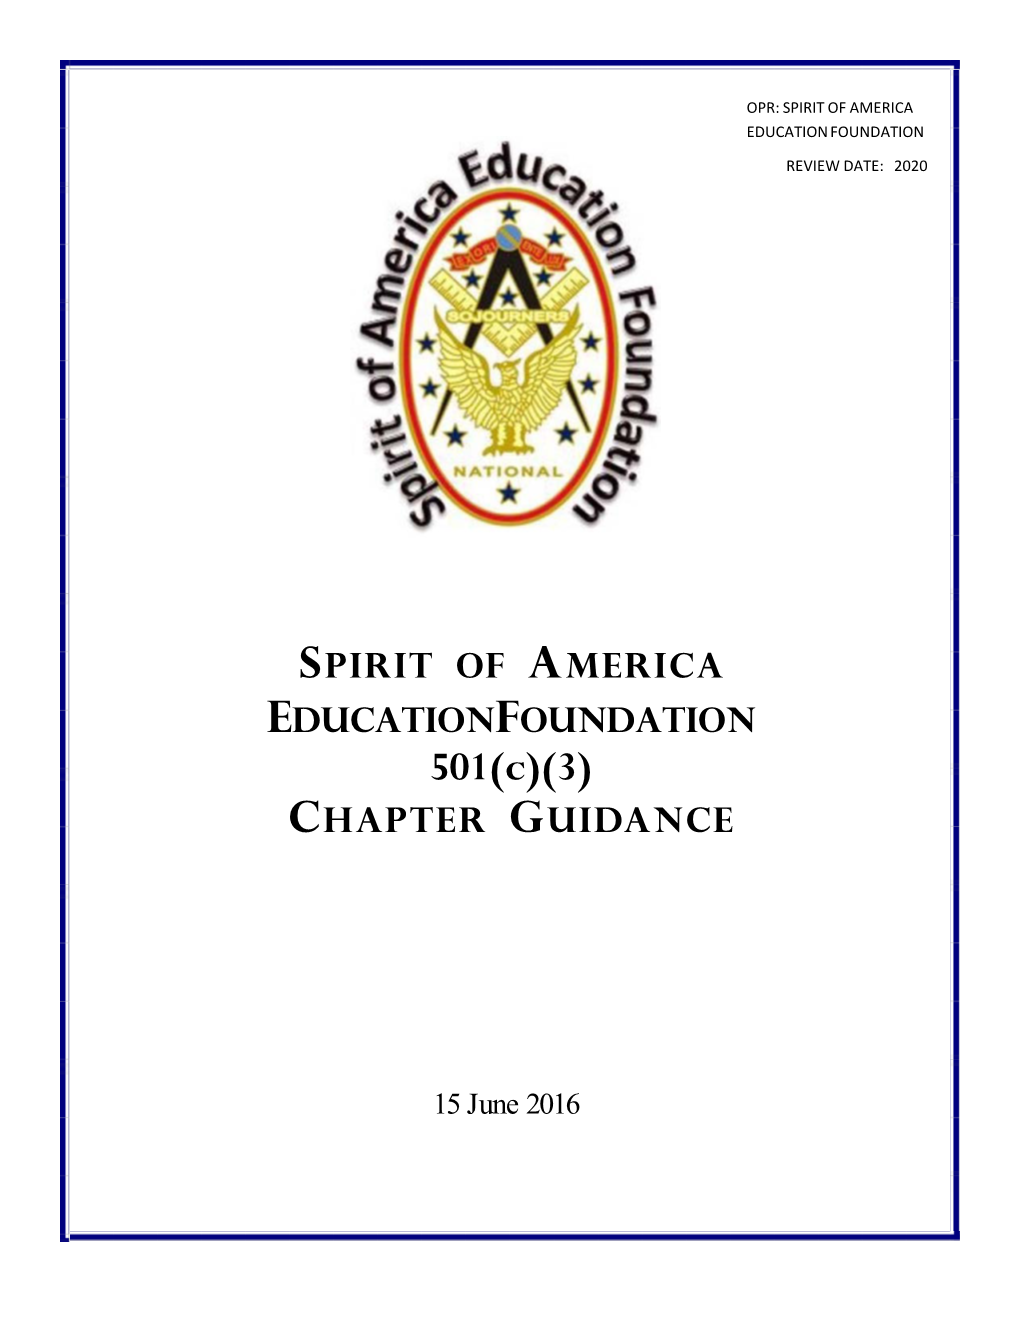 SPIRIT of AMERICA EDUCATION FOUNDATION 501(C)(3) CHAPTER GUIDANCE